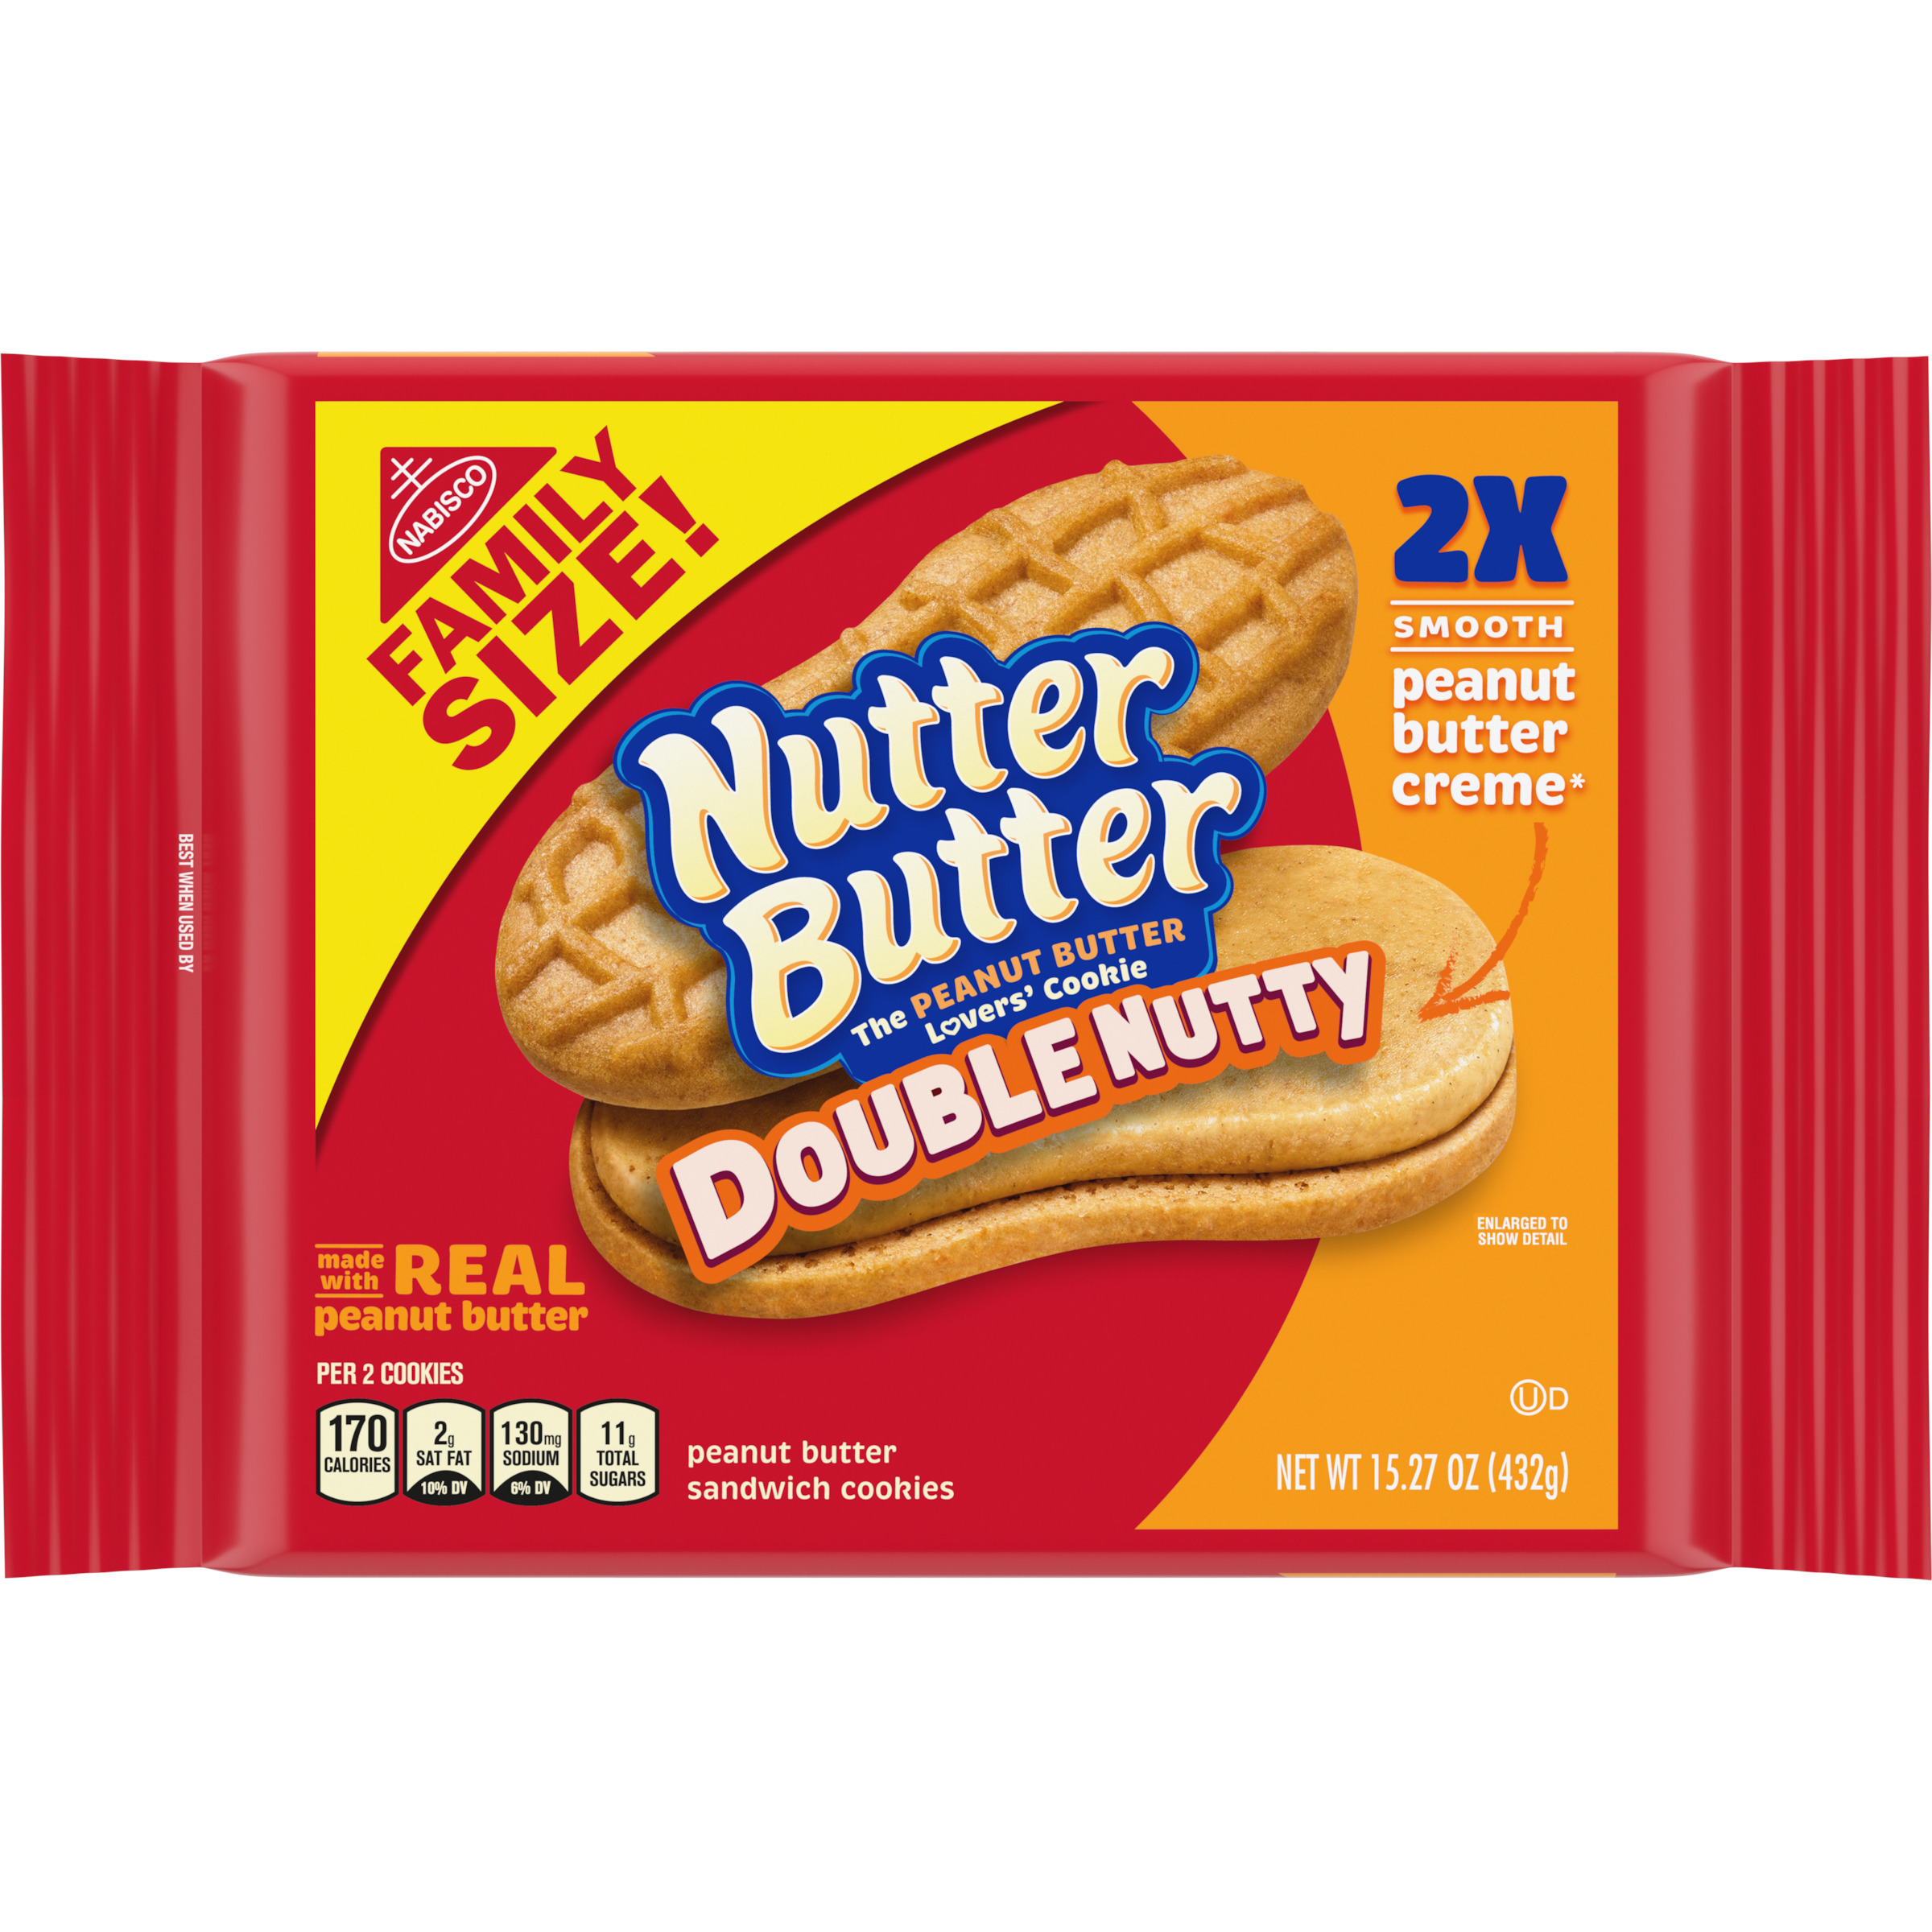 Nutter Butter Double Nutty Peanut Butter Sandwich Cookies, Family Size, 15.27 oz-1